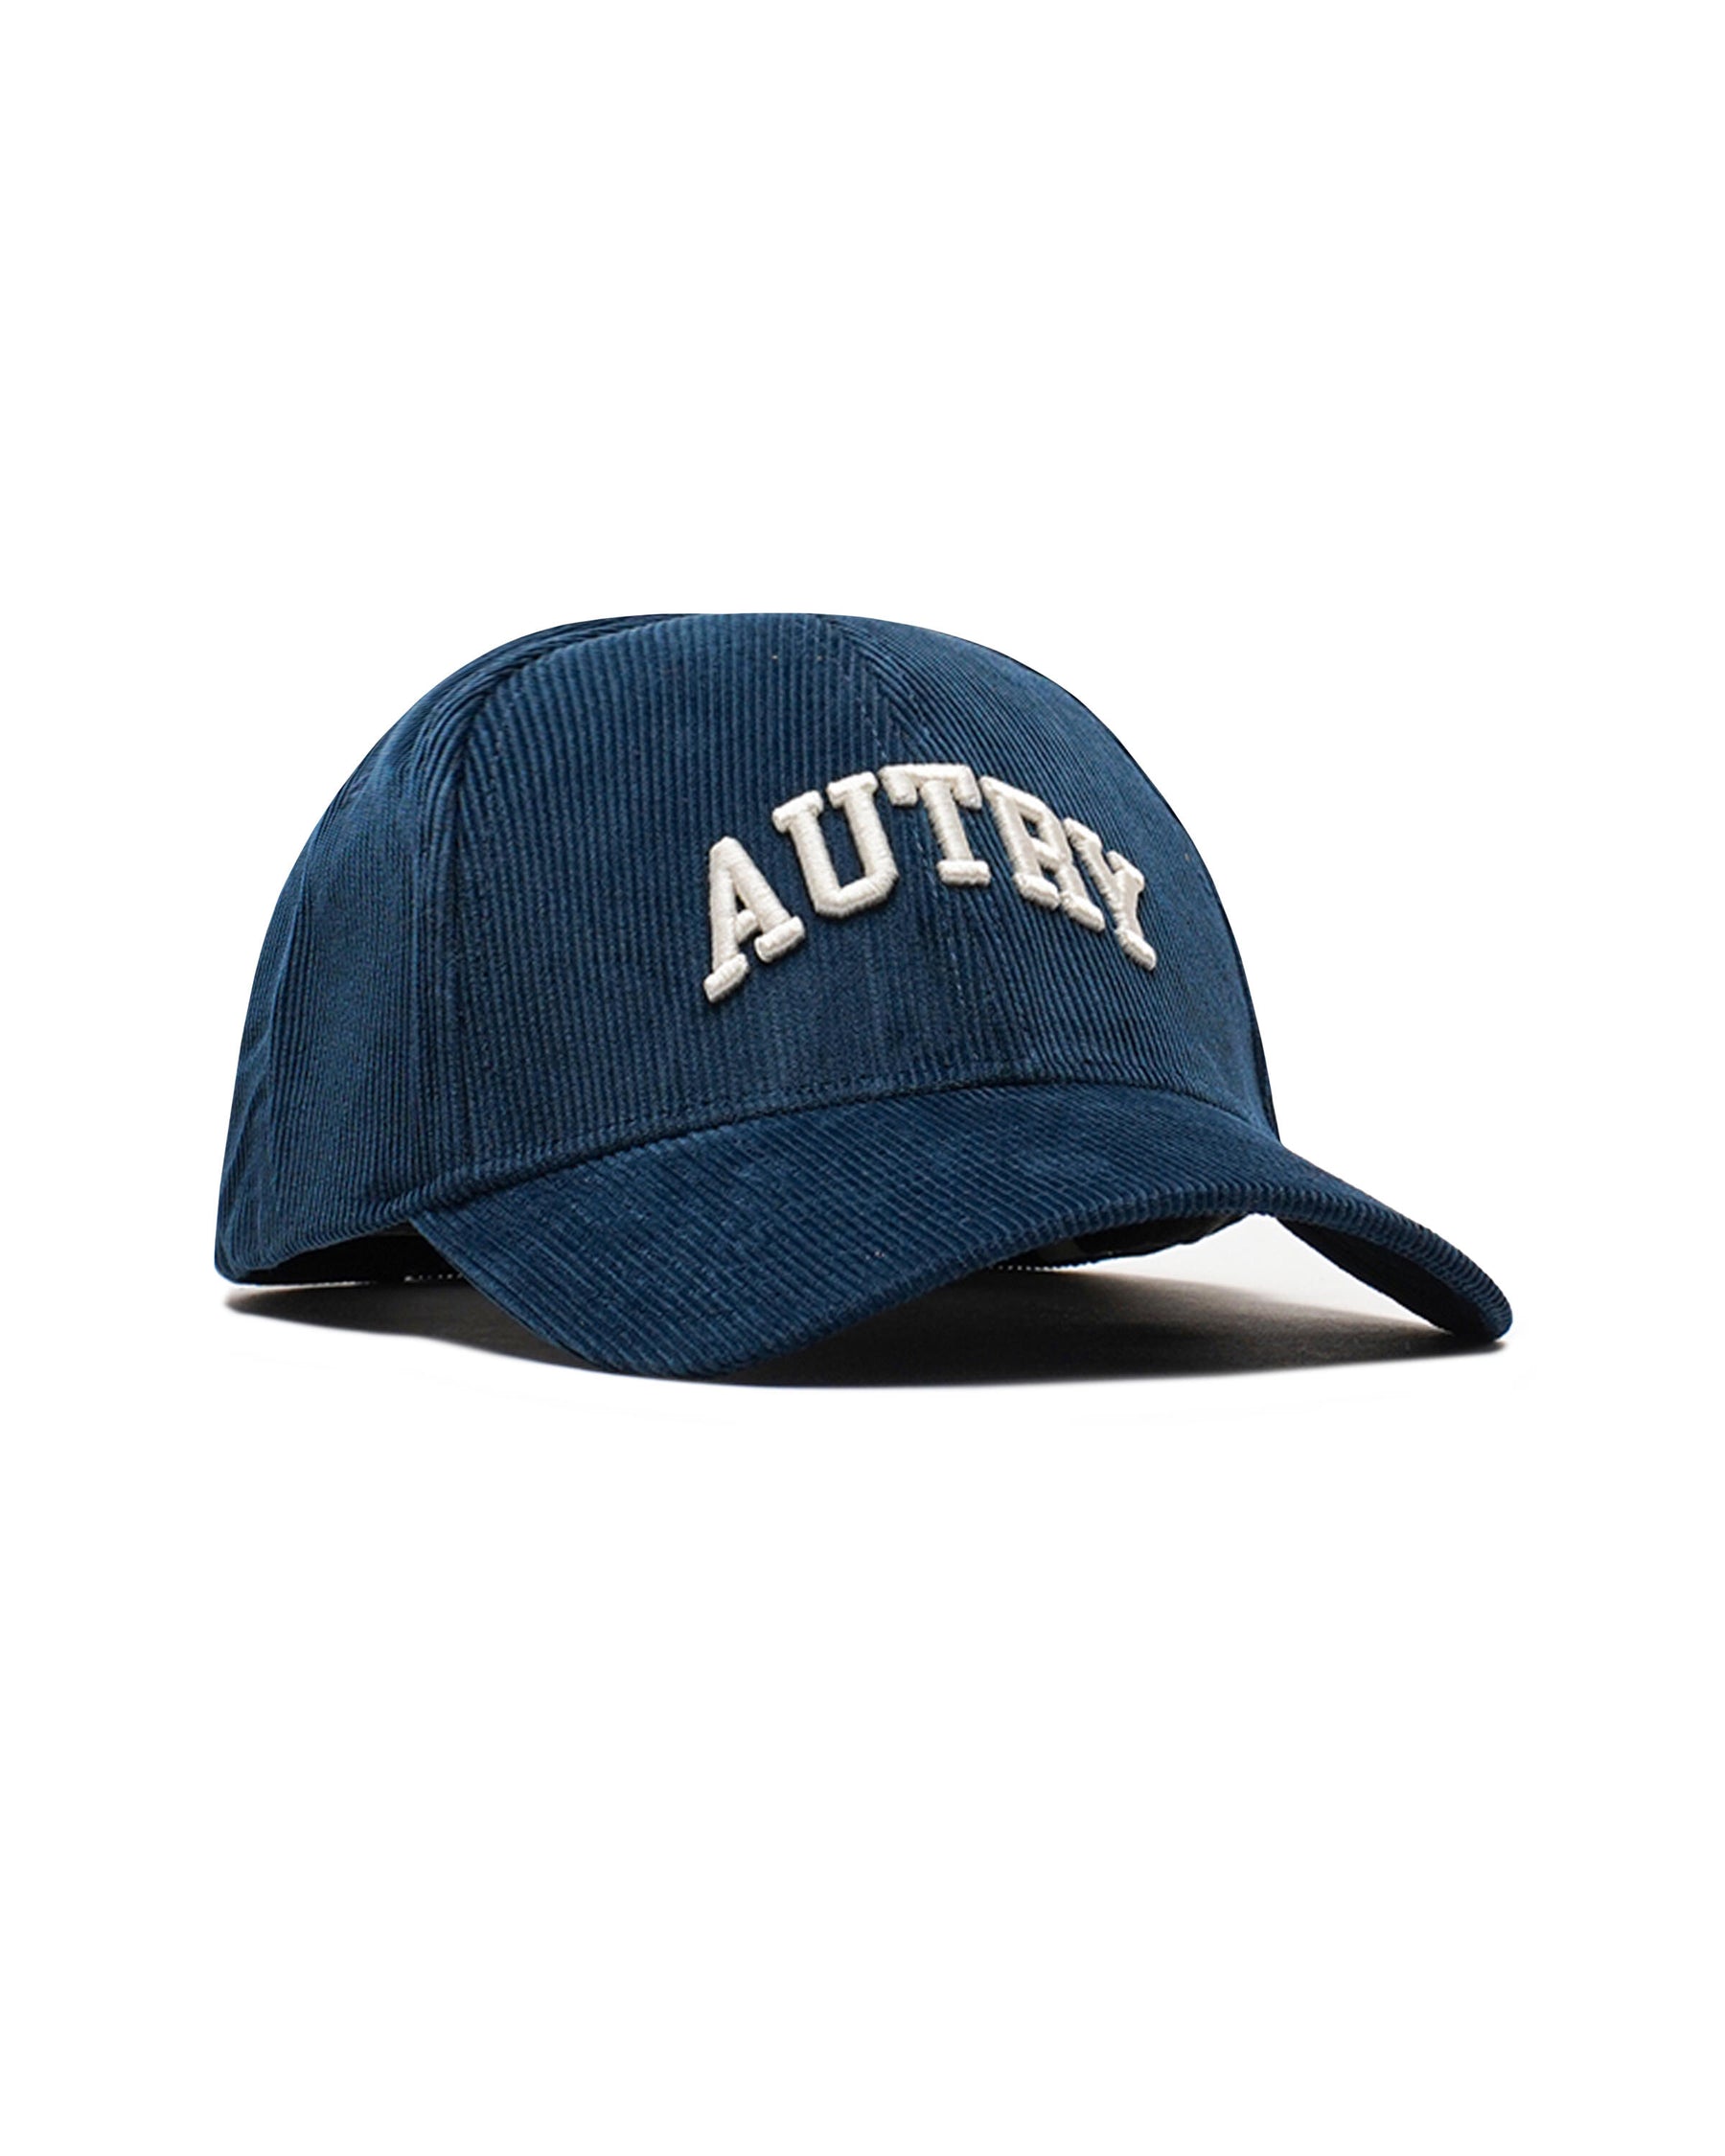 Autry Action Shoes BASEBALL CAP